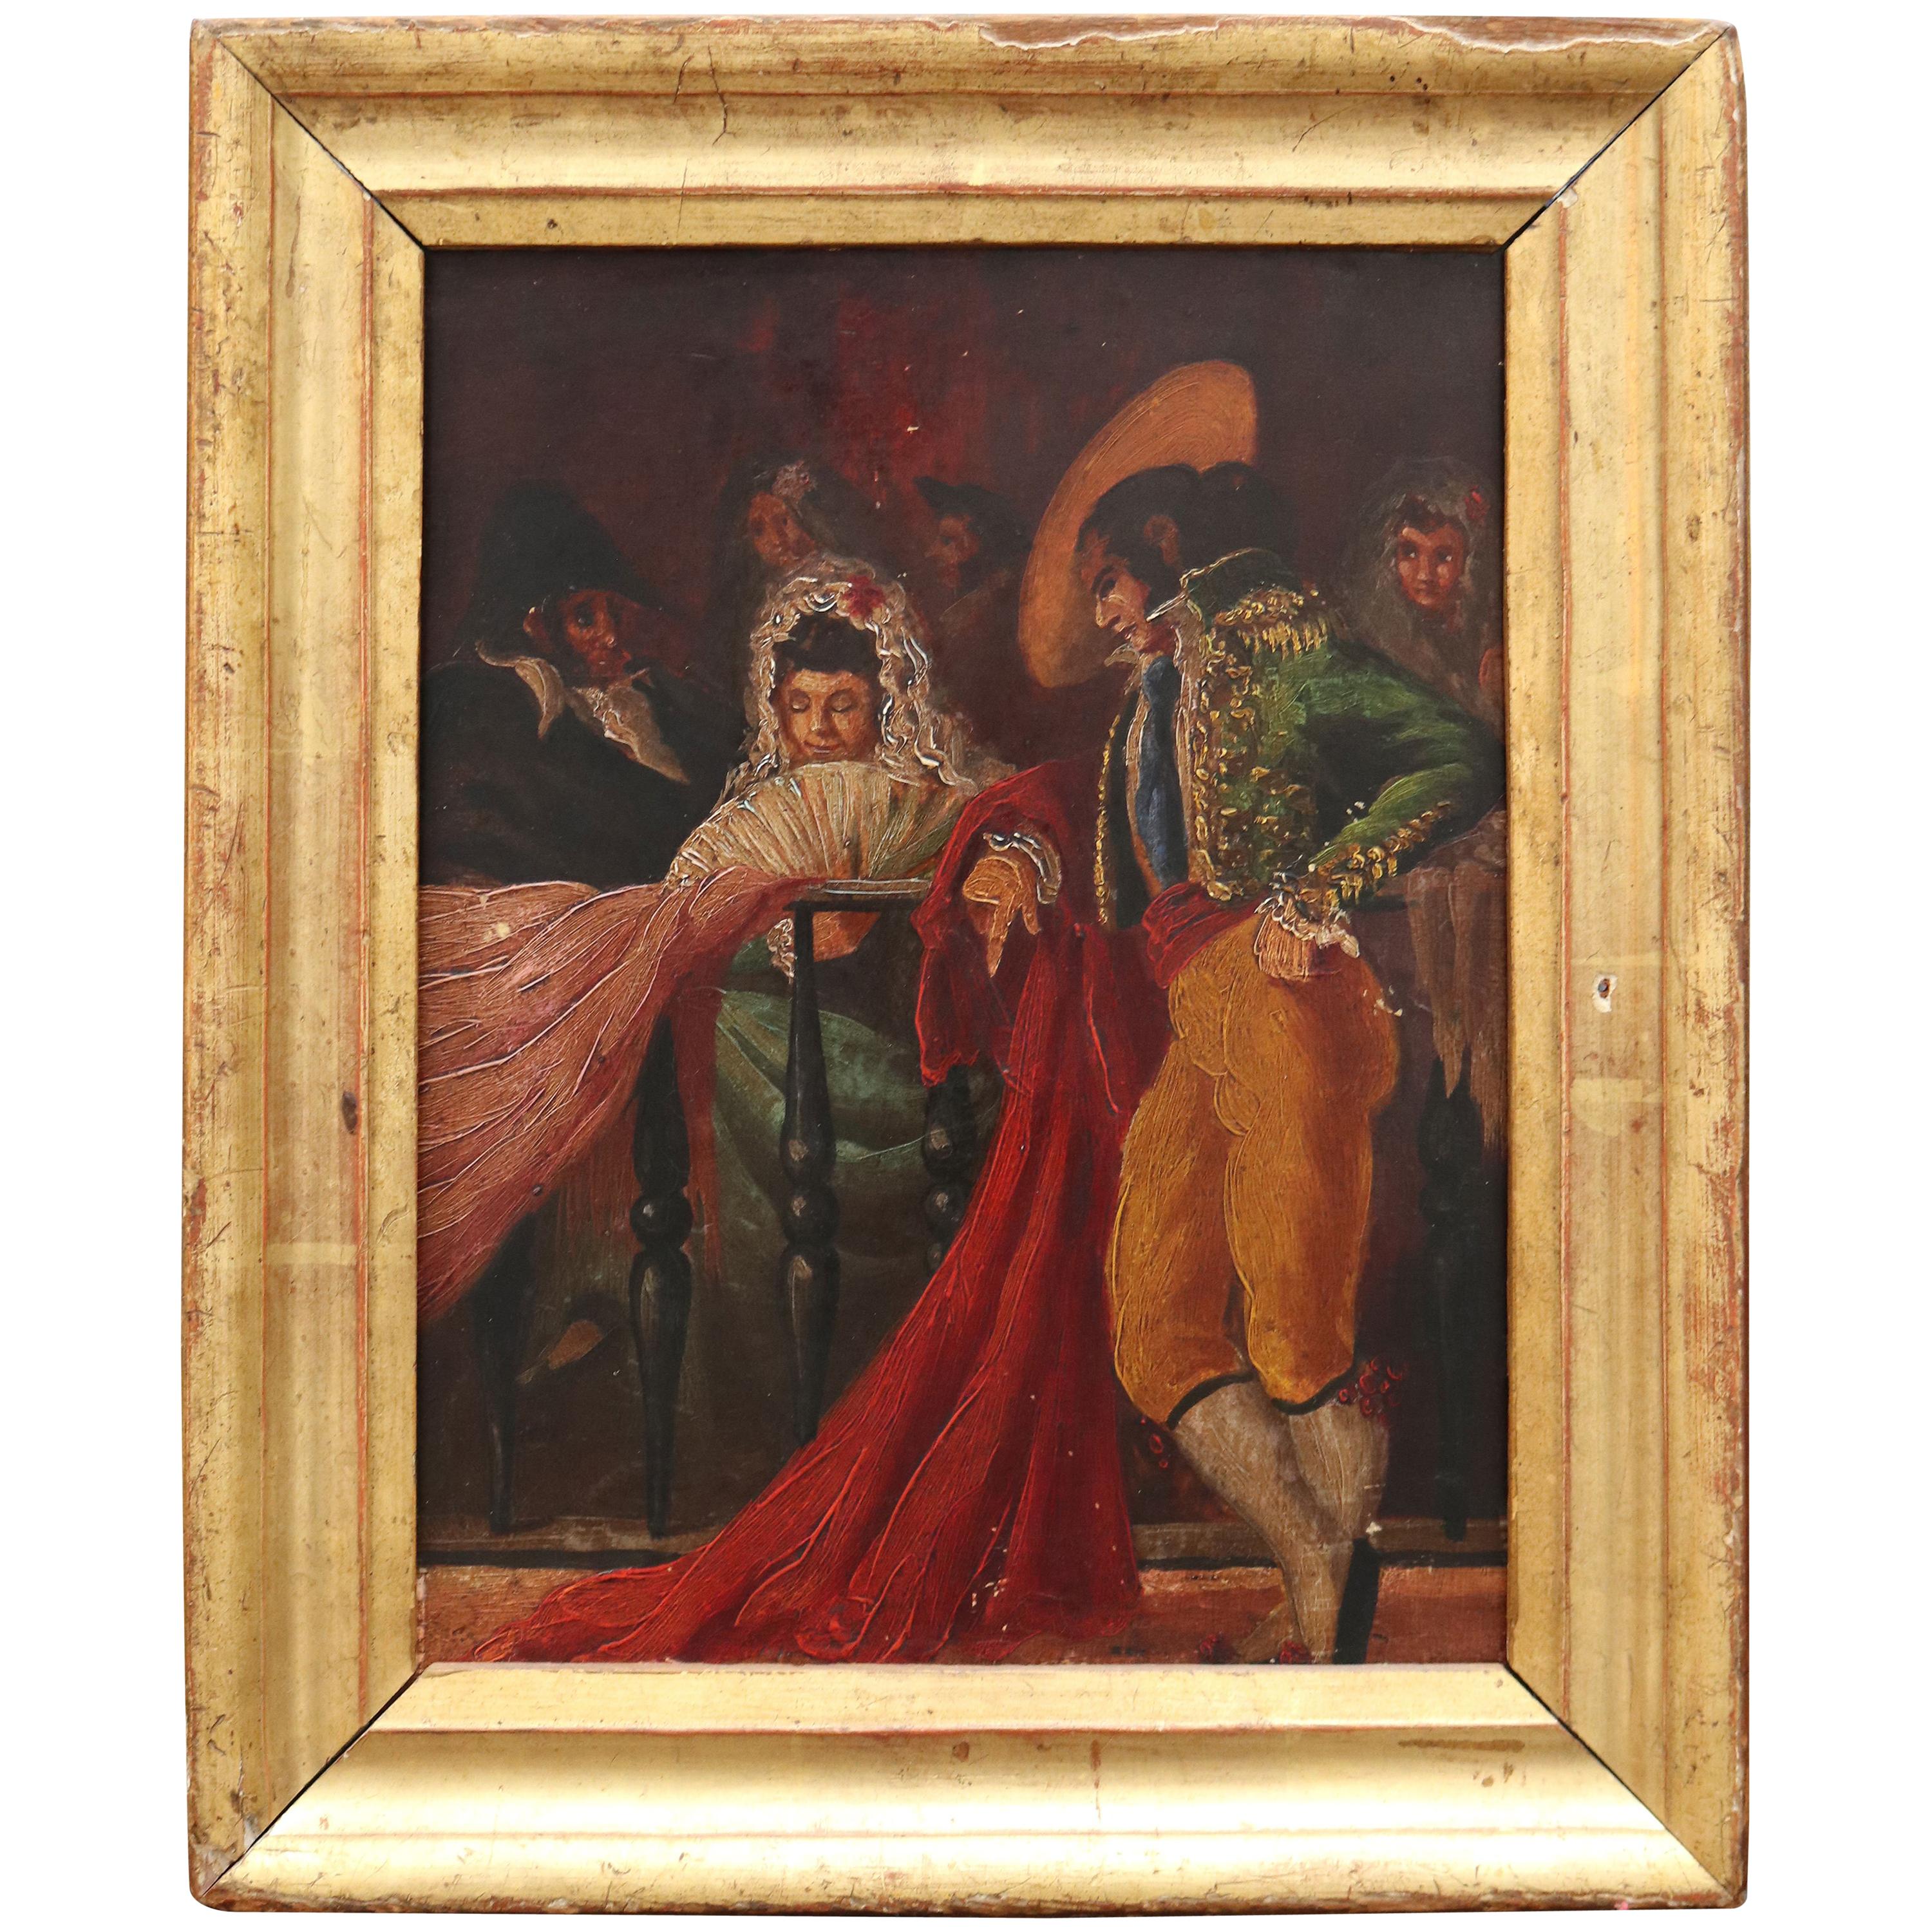 19th Century Spanish Oil on Wood Painting in Bullfighter Style